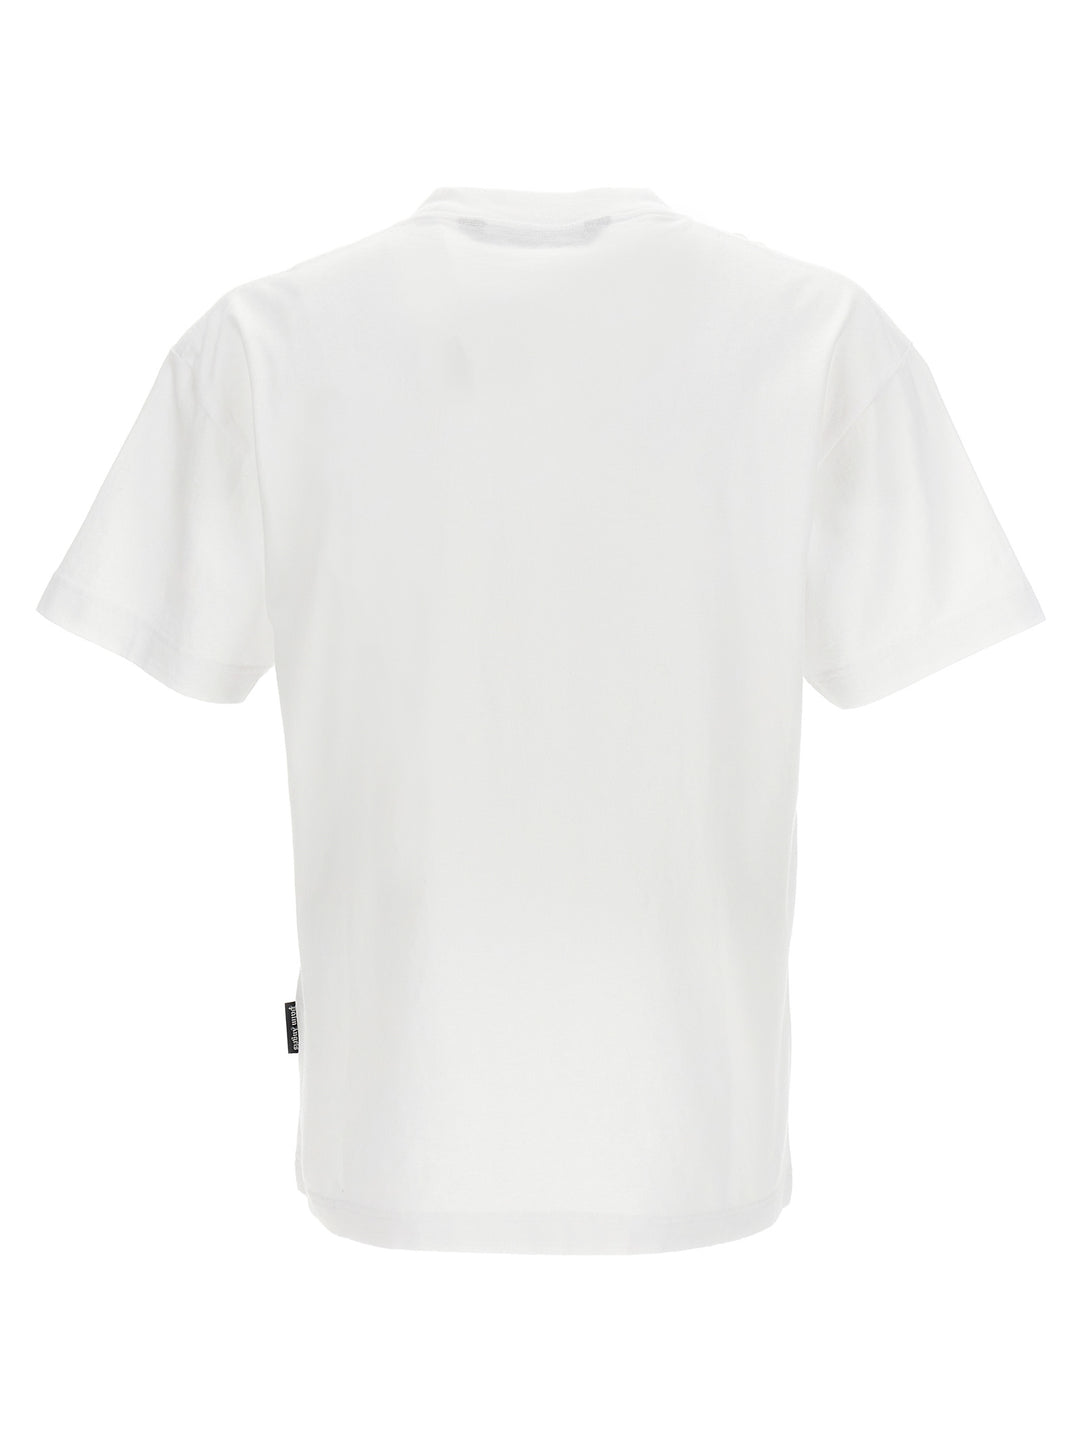 Sketchy T Shirt Bianco